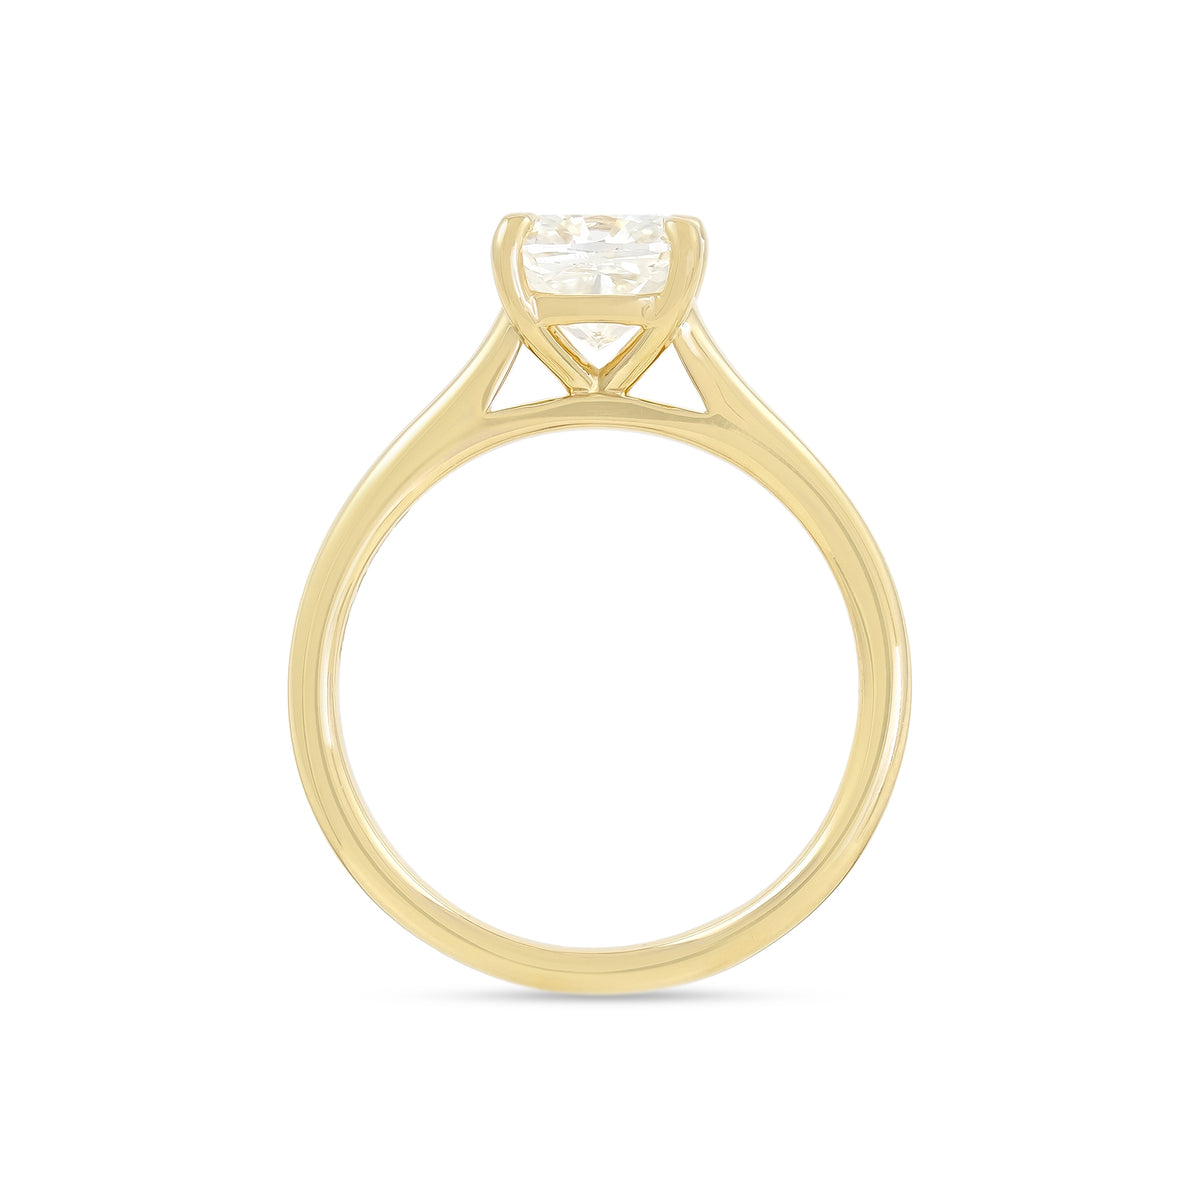 1.61ct Brilliant-Cut Diamond Solitaire Engagement Ring